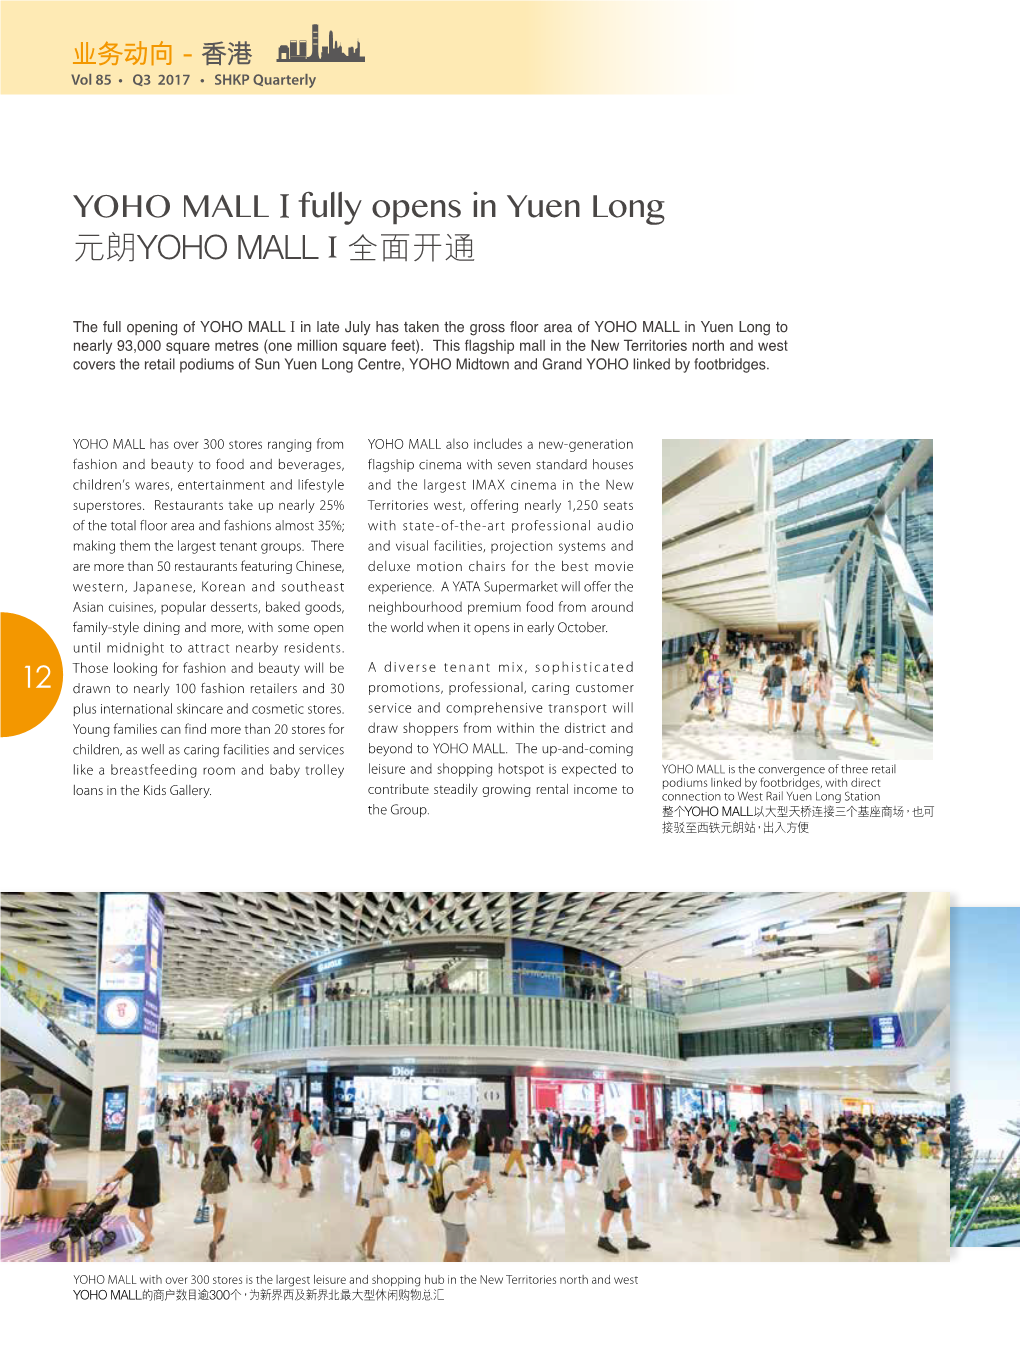 YOHO MALL I Fully Opens in Yuen Long 元朗YOHO MALL I 全面開通